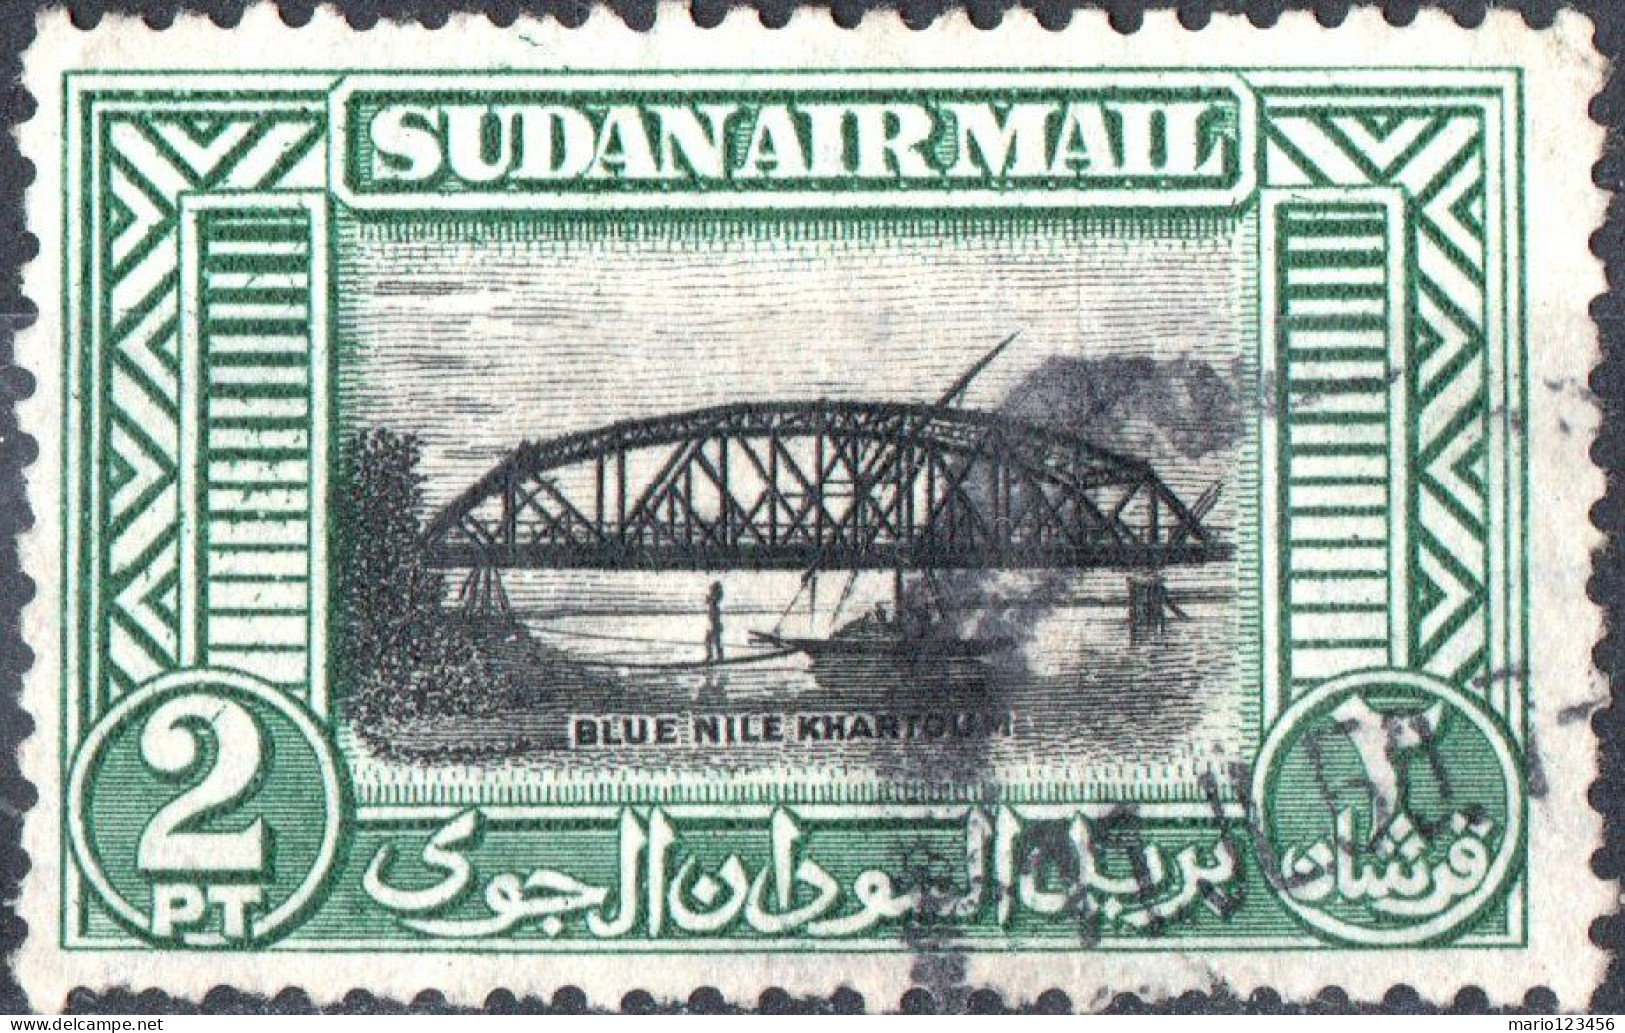 SUDAN BRITANNICO, SUDAN, PAESAGGI; LANDSCAPE, POSTA AEREA, AIRMAIL, 1950, USATI Scott:SD C35, Yt:SD PA33 - Sudan (...-1951)